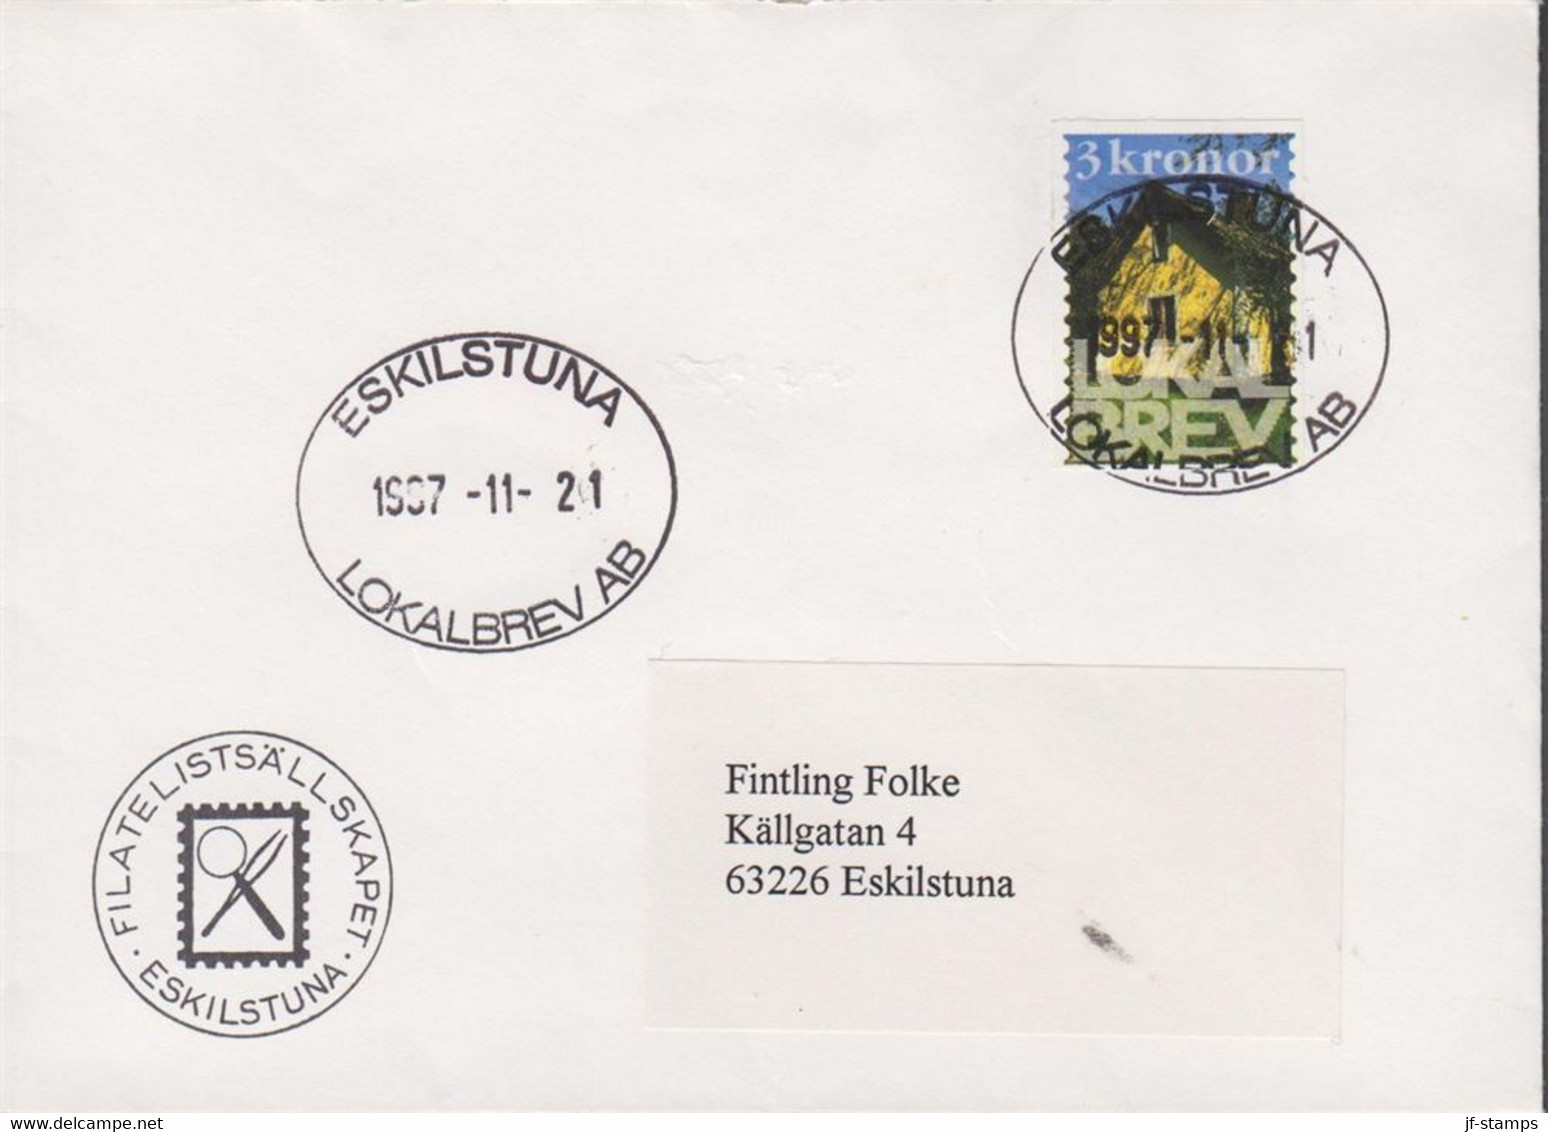 1997. SVERIGE. ESKILSTUNA LOKALBREV AB. 3 Kronor On Cover Cancelled ESKILSTUNA LOKALBREV AB 1997-11-21. Un... - JF520090 - Local Post Stamps